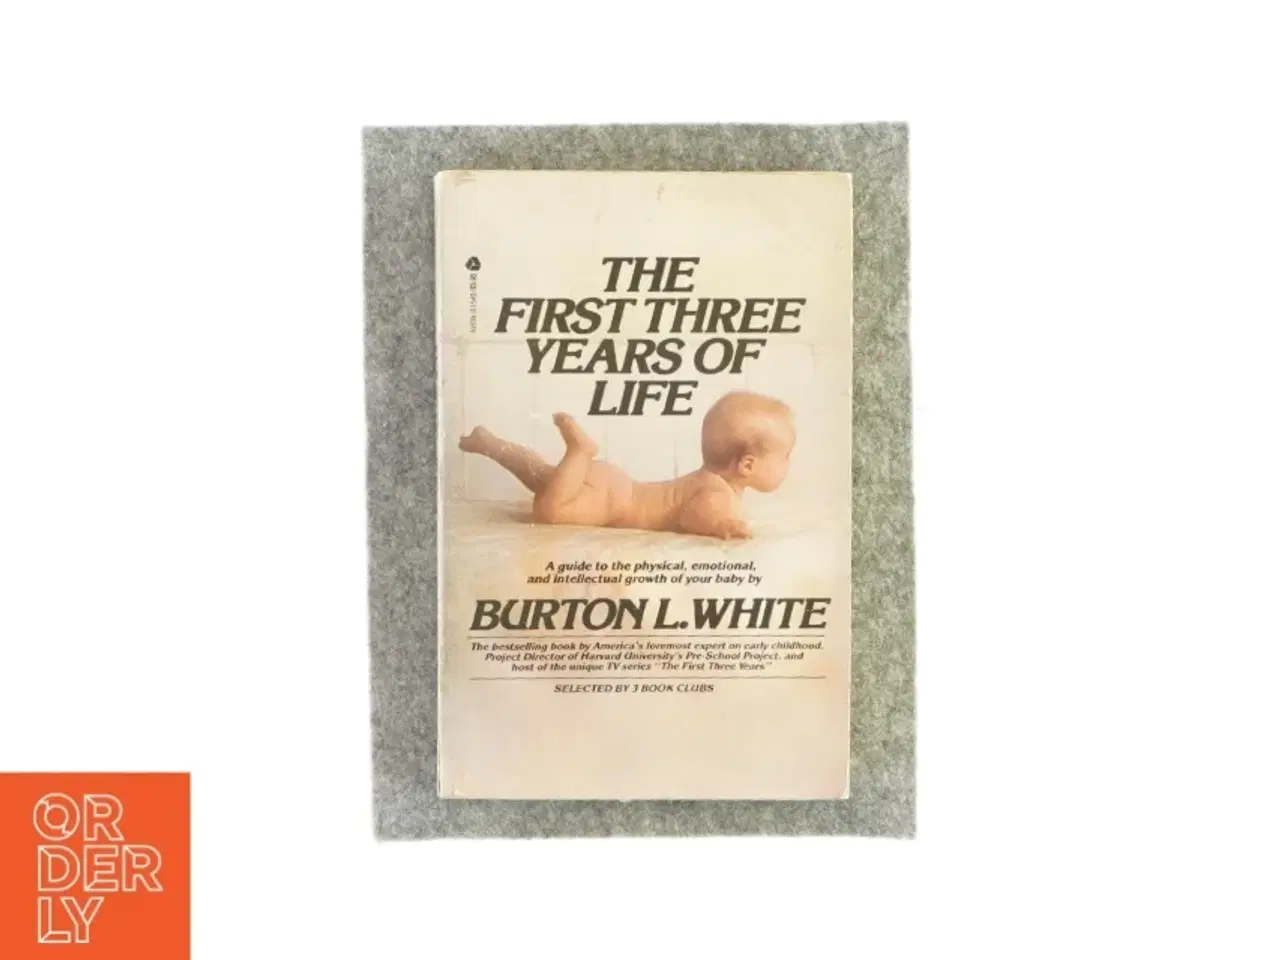 Billede 1 - The first three years of life af Burton L. White (bog)